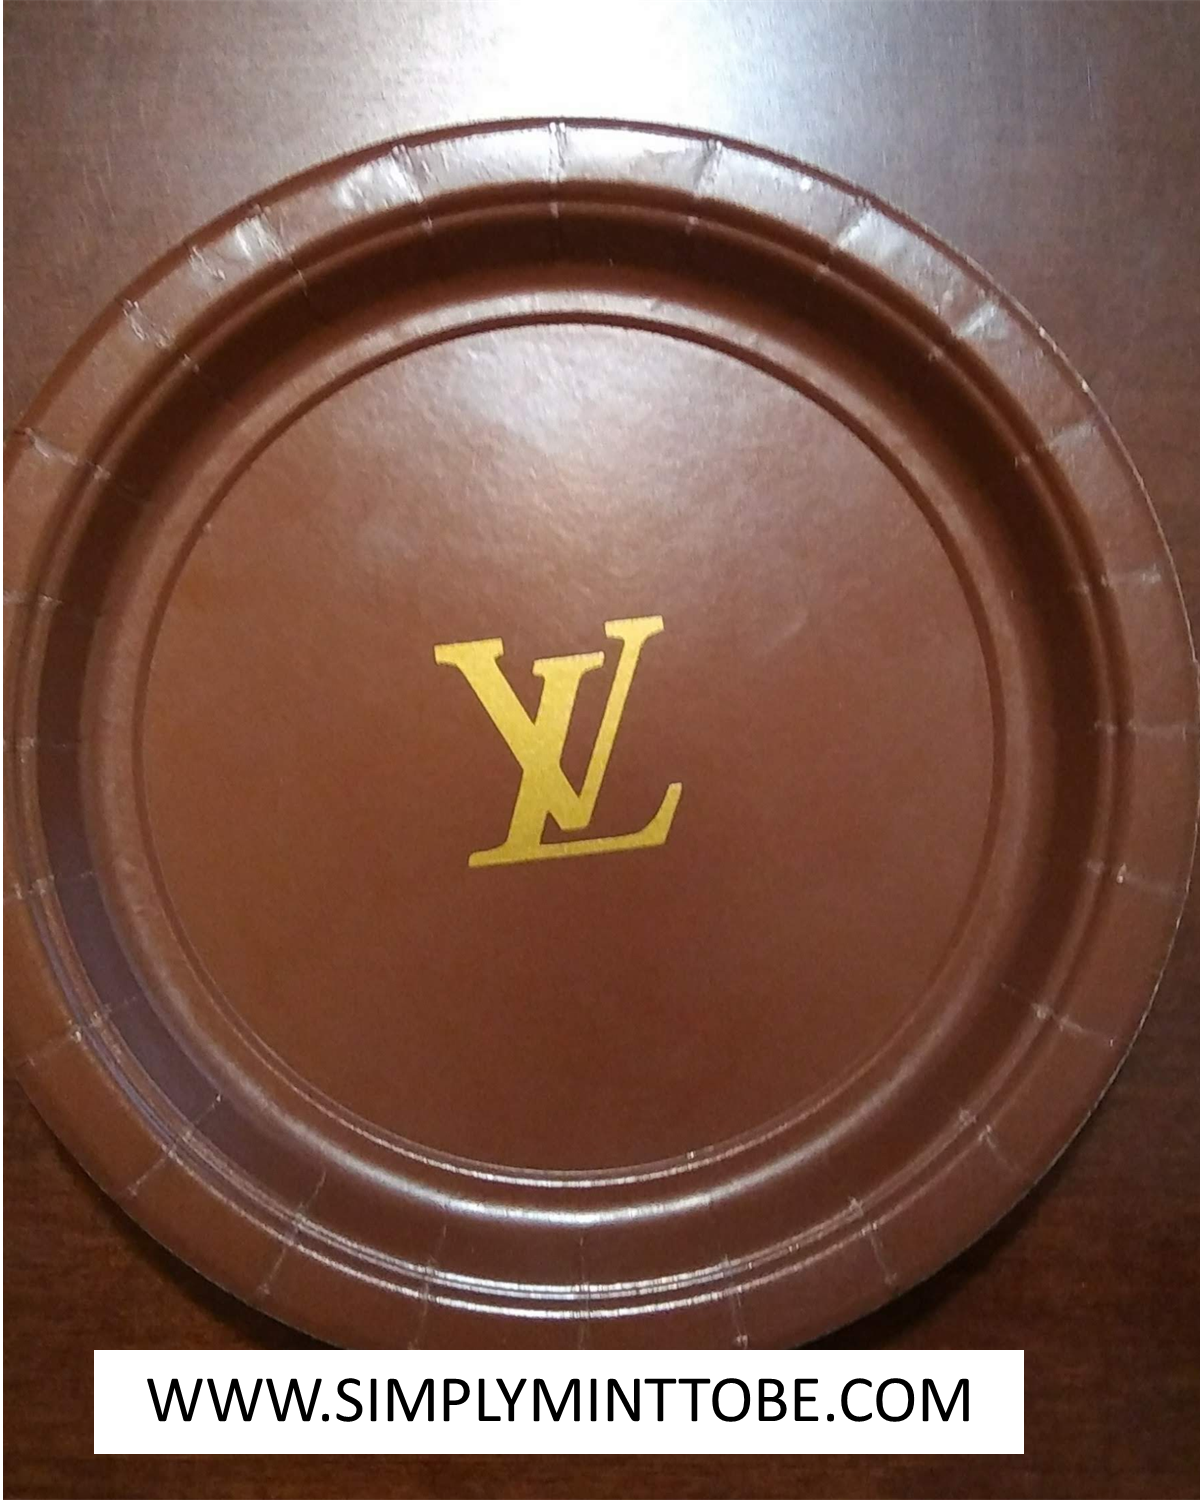 gold lv logo png